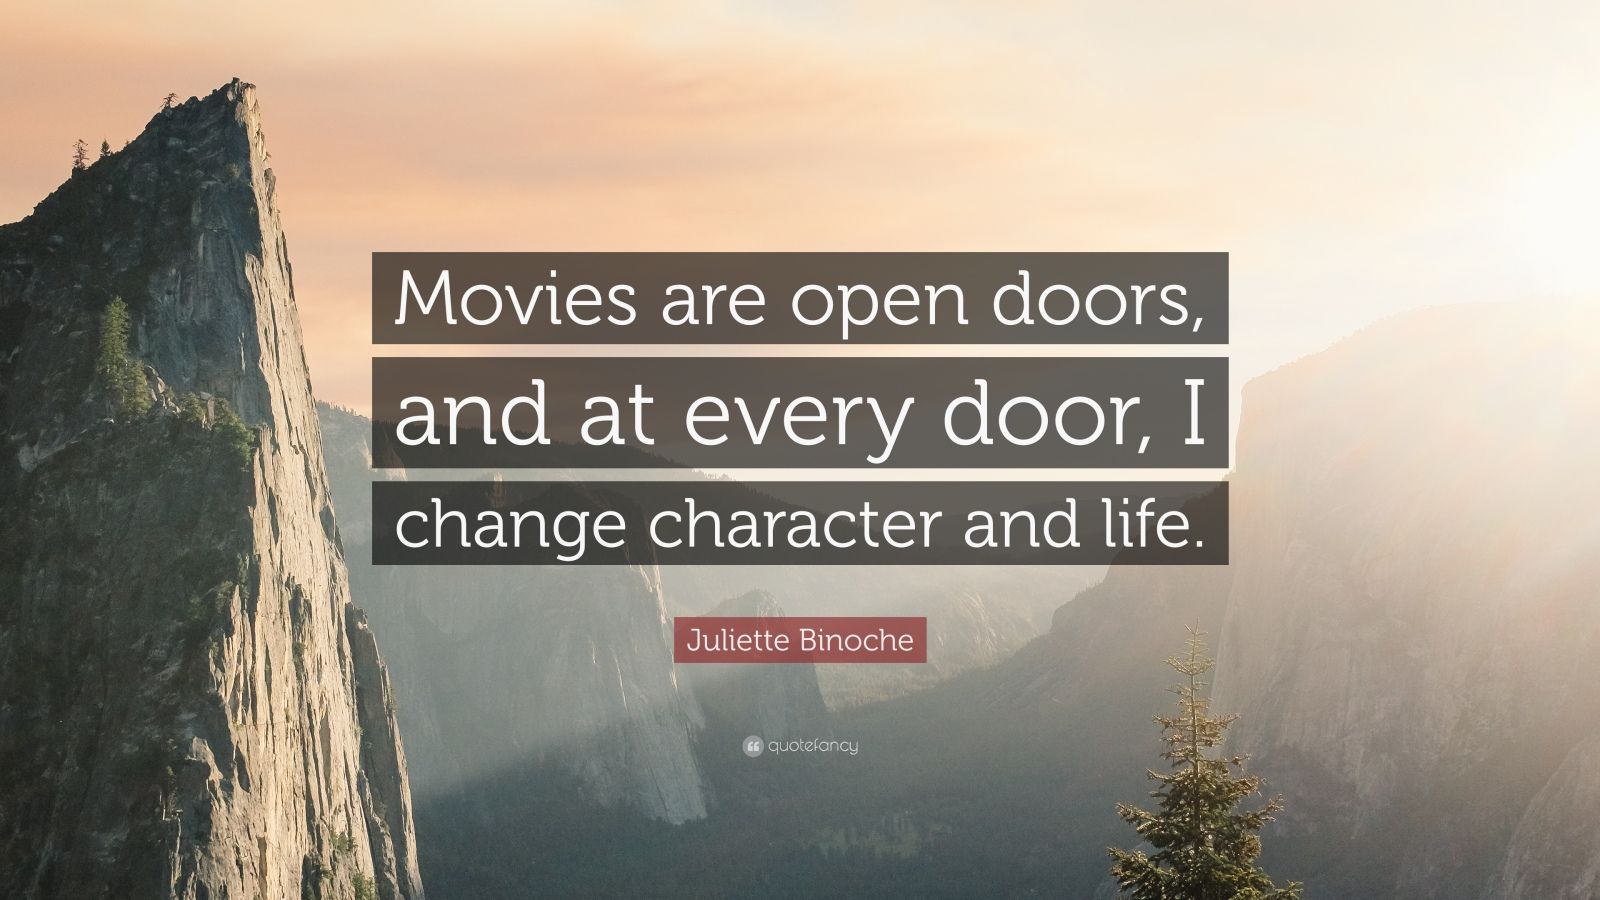 the doors movie quotes